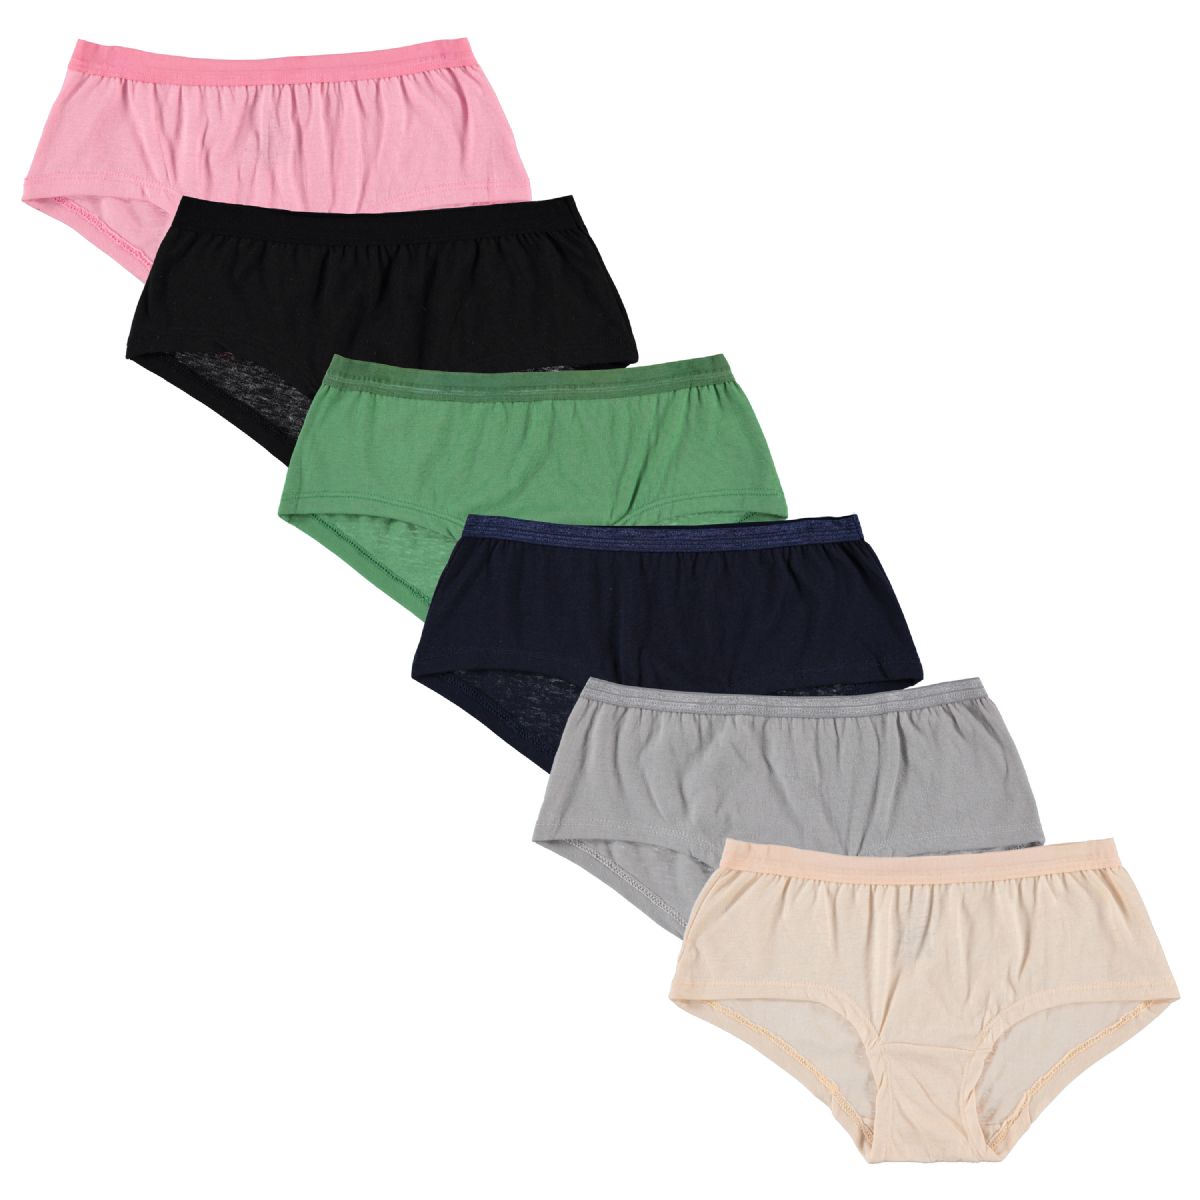 24 Wholesale Yacht & Smith Womens Cotton Lycra Underwear, Panty Briefs, 95% Cotton Soft Assorted Colors, Size Medium